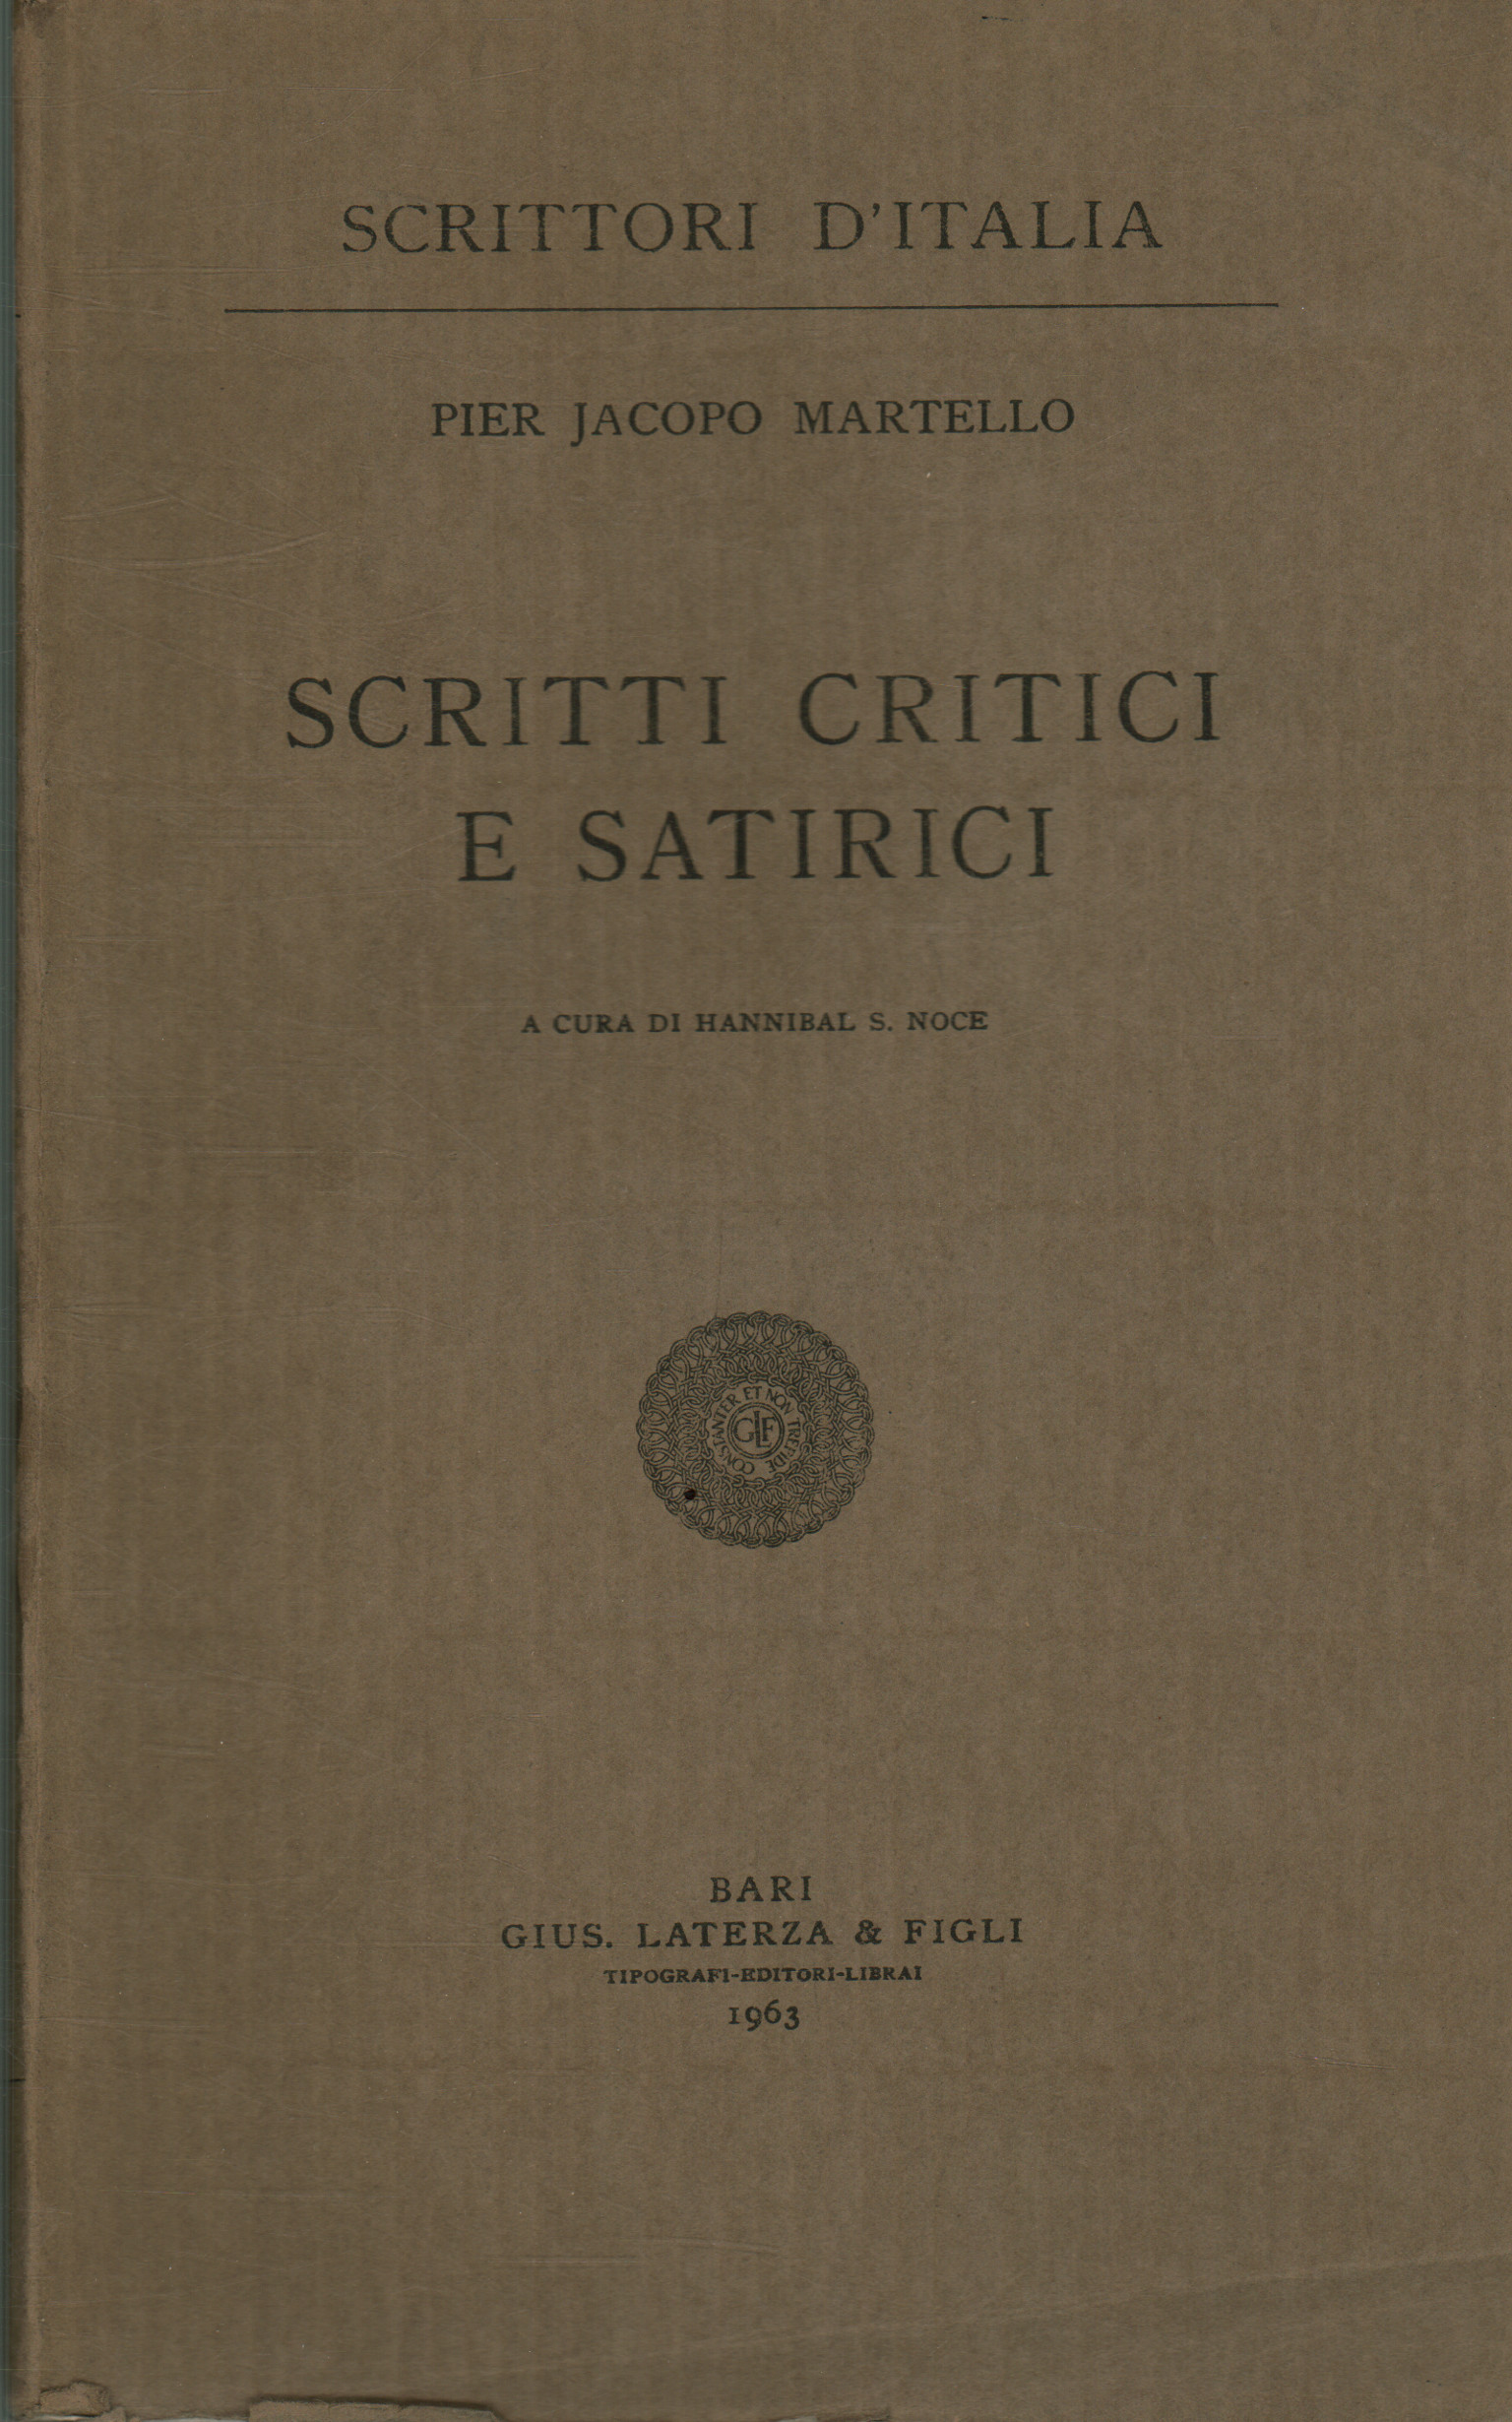 Critical and satirical writings, Pier Jacopo Martello